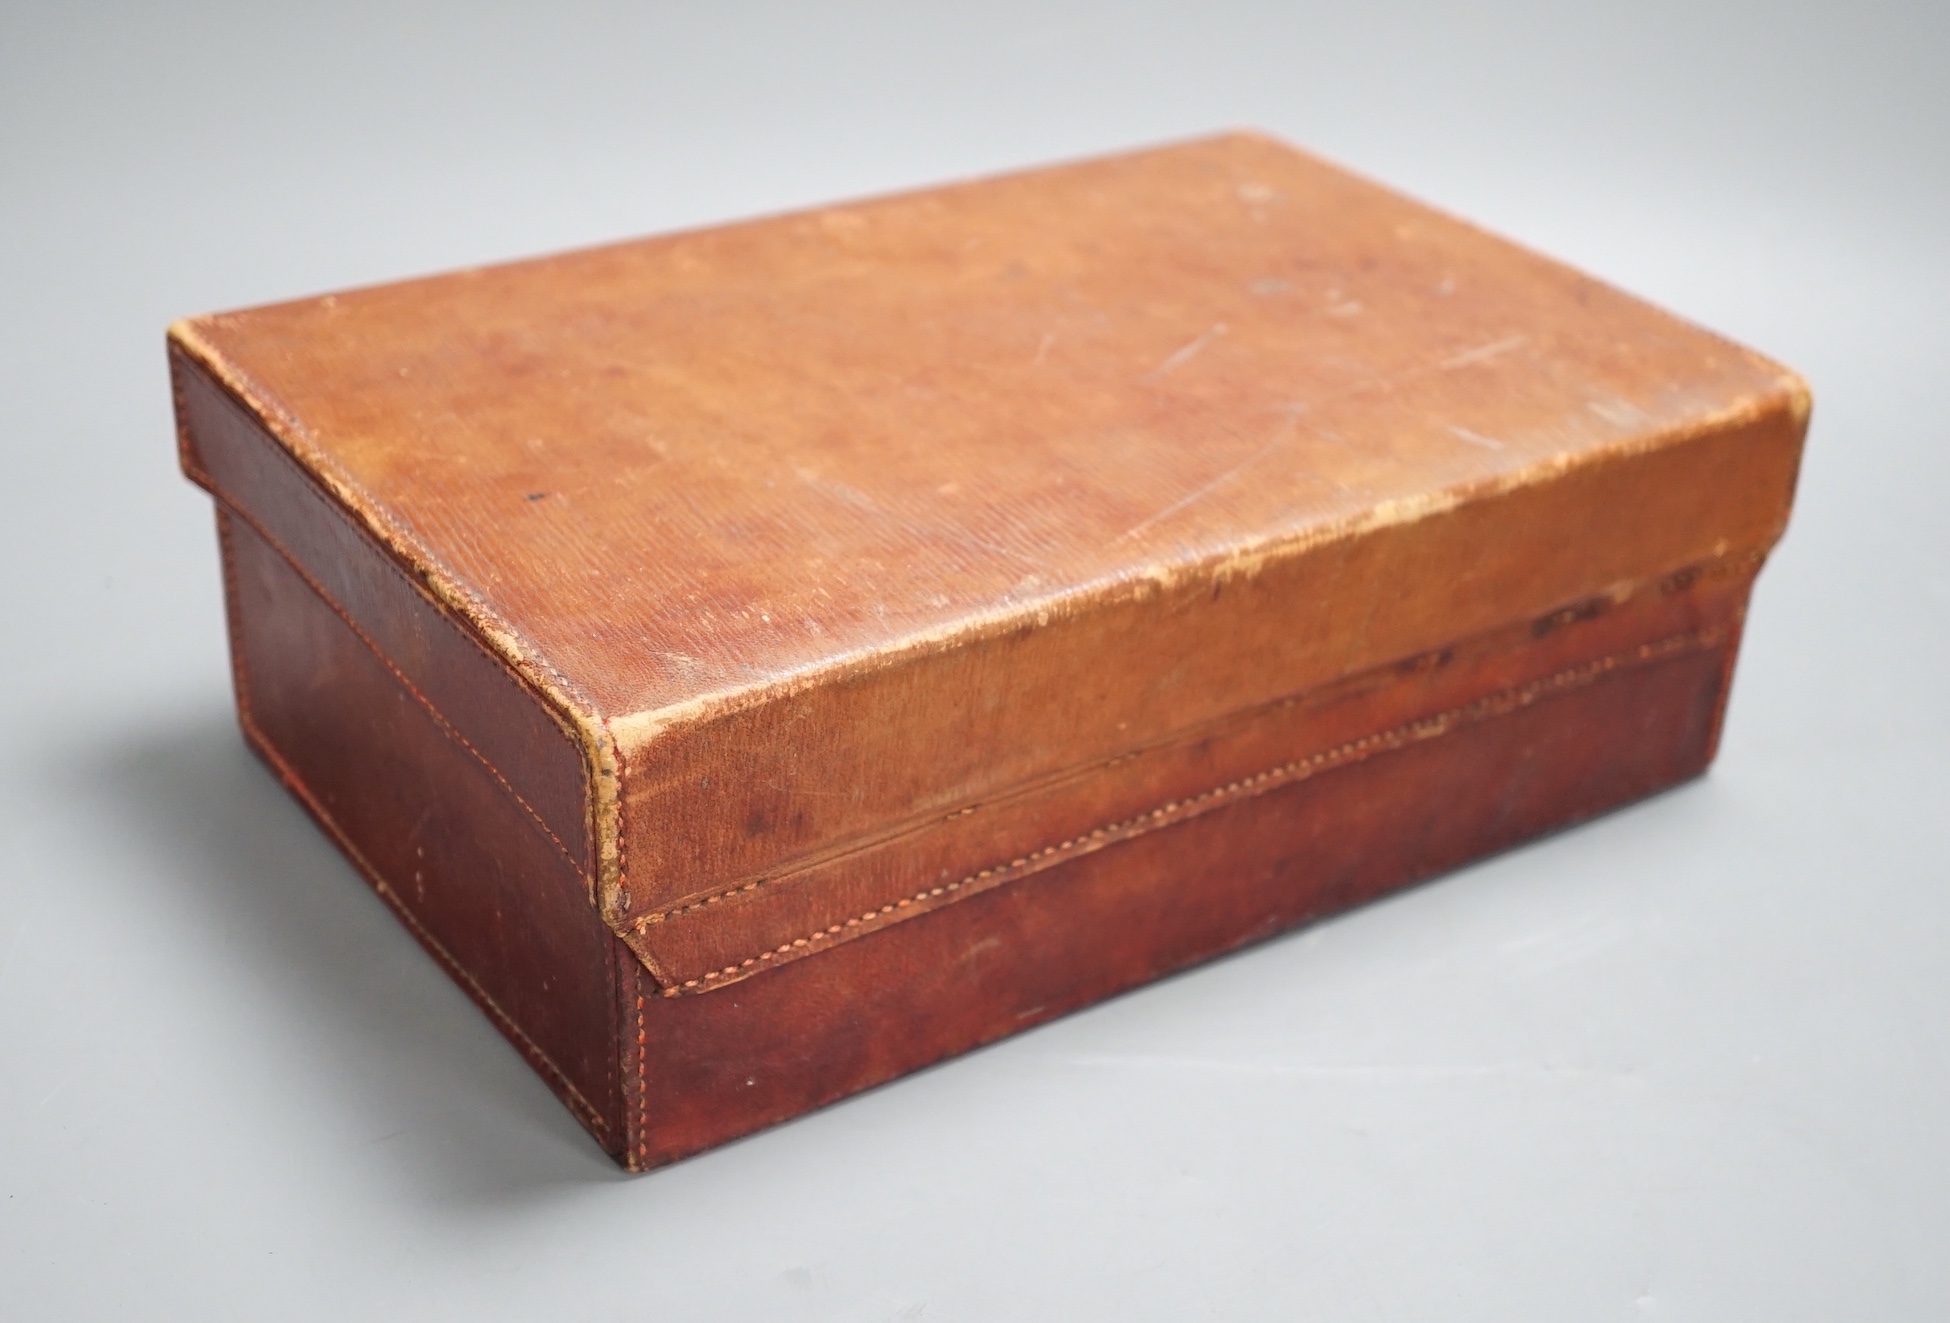 A Vintage Asprey red leather case, 28cm - Image 3 of 4